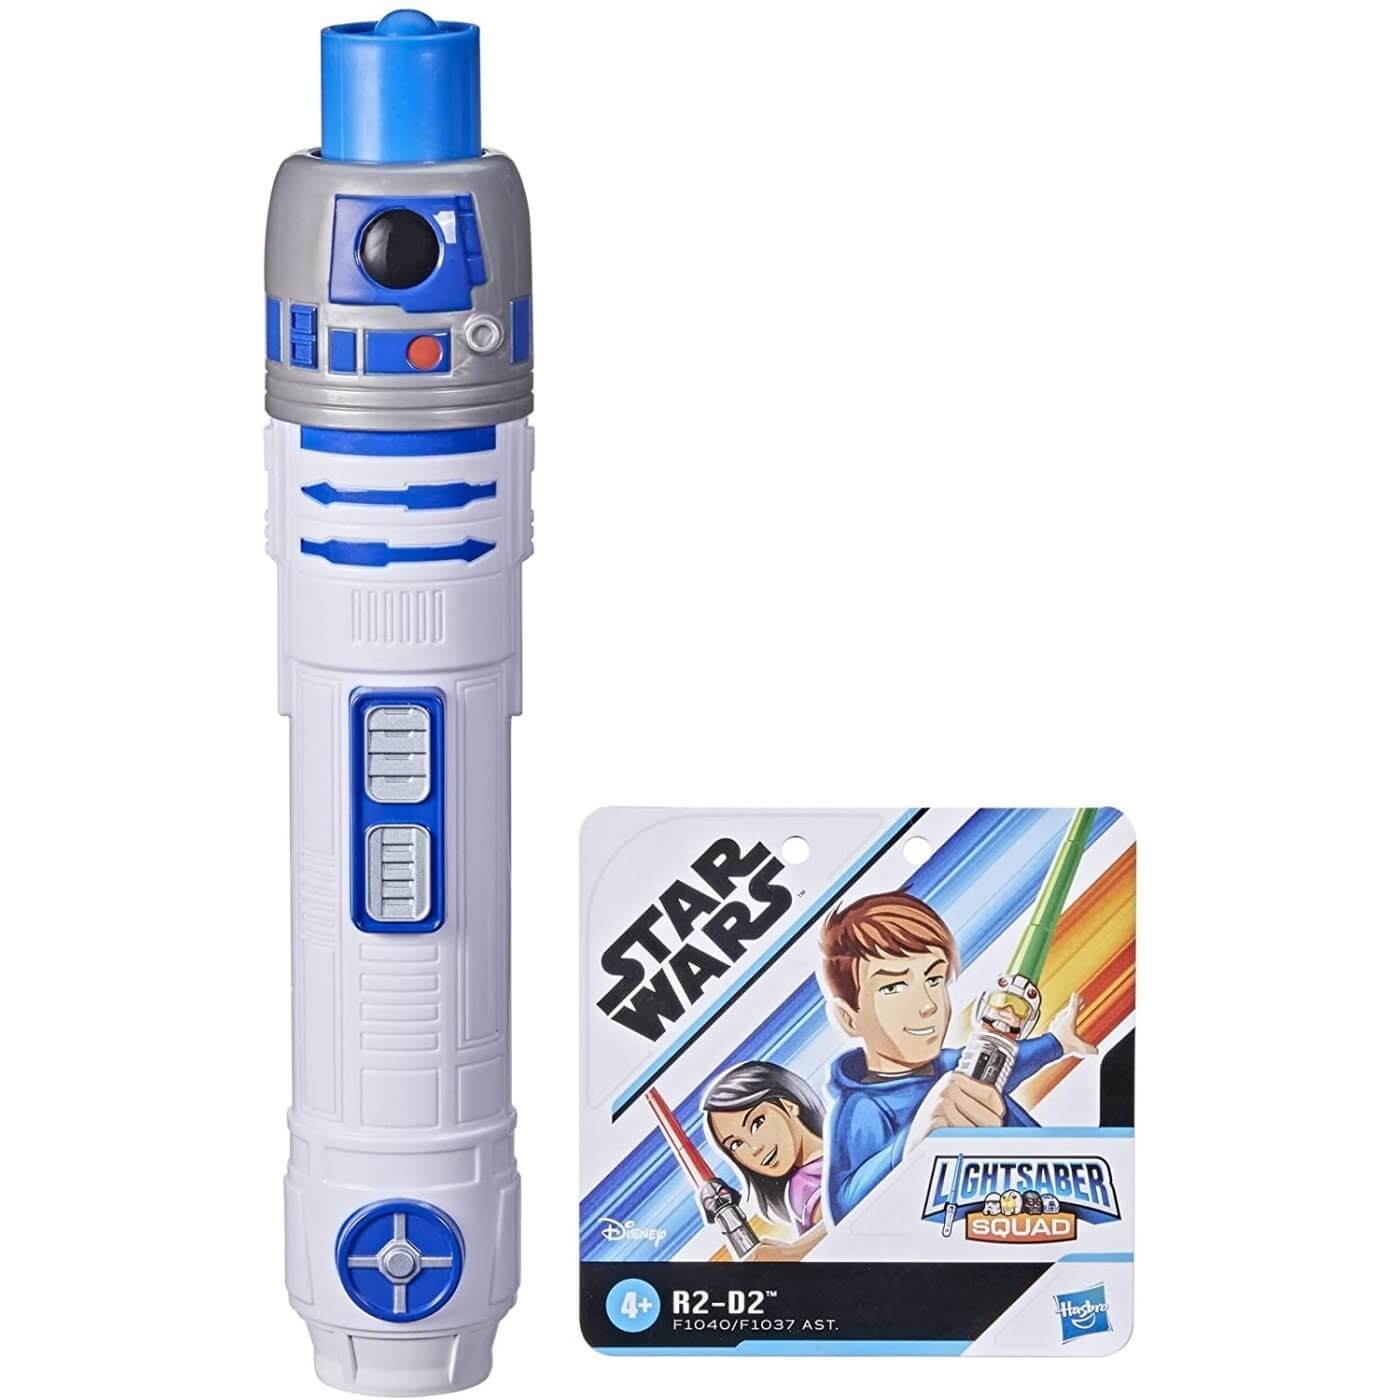 https://cdn.shopify.com/s/files/1/0863/0758/products/star-wars-lightsaber-squad-r2-d2-extendable-blue-lightsaber-packaging.jpg?v=1679389524